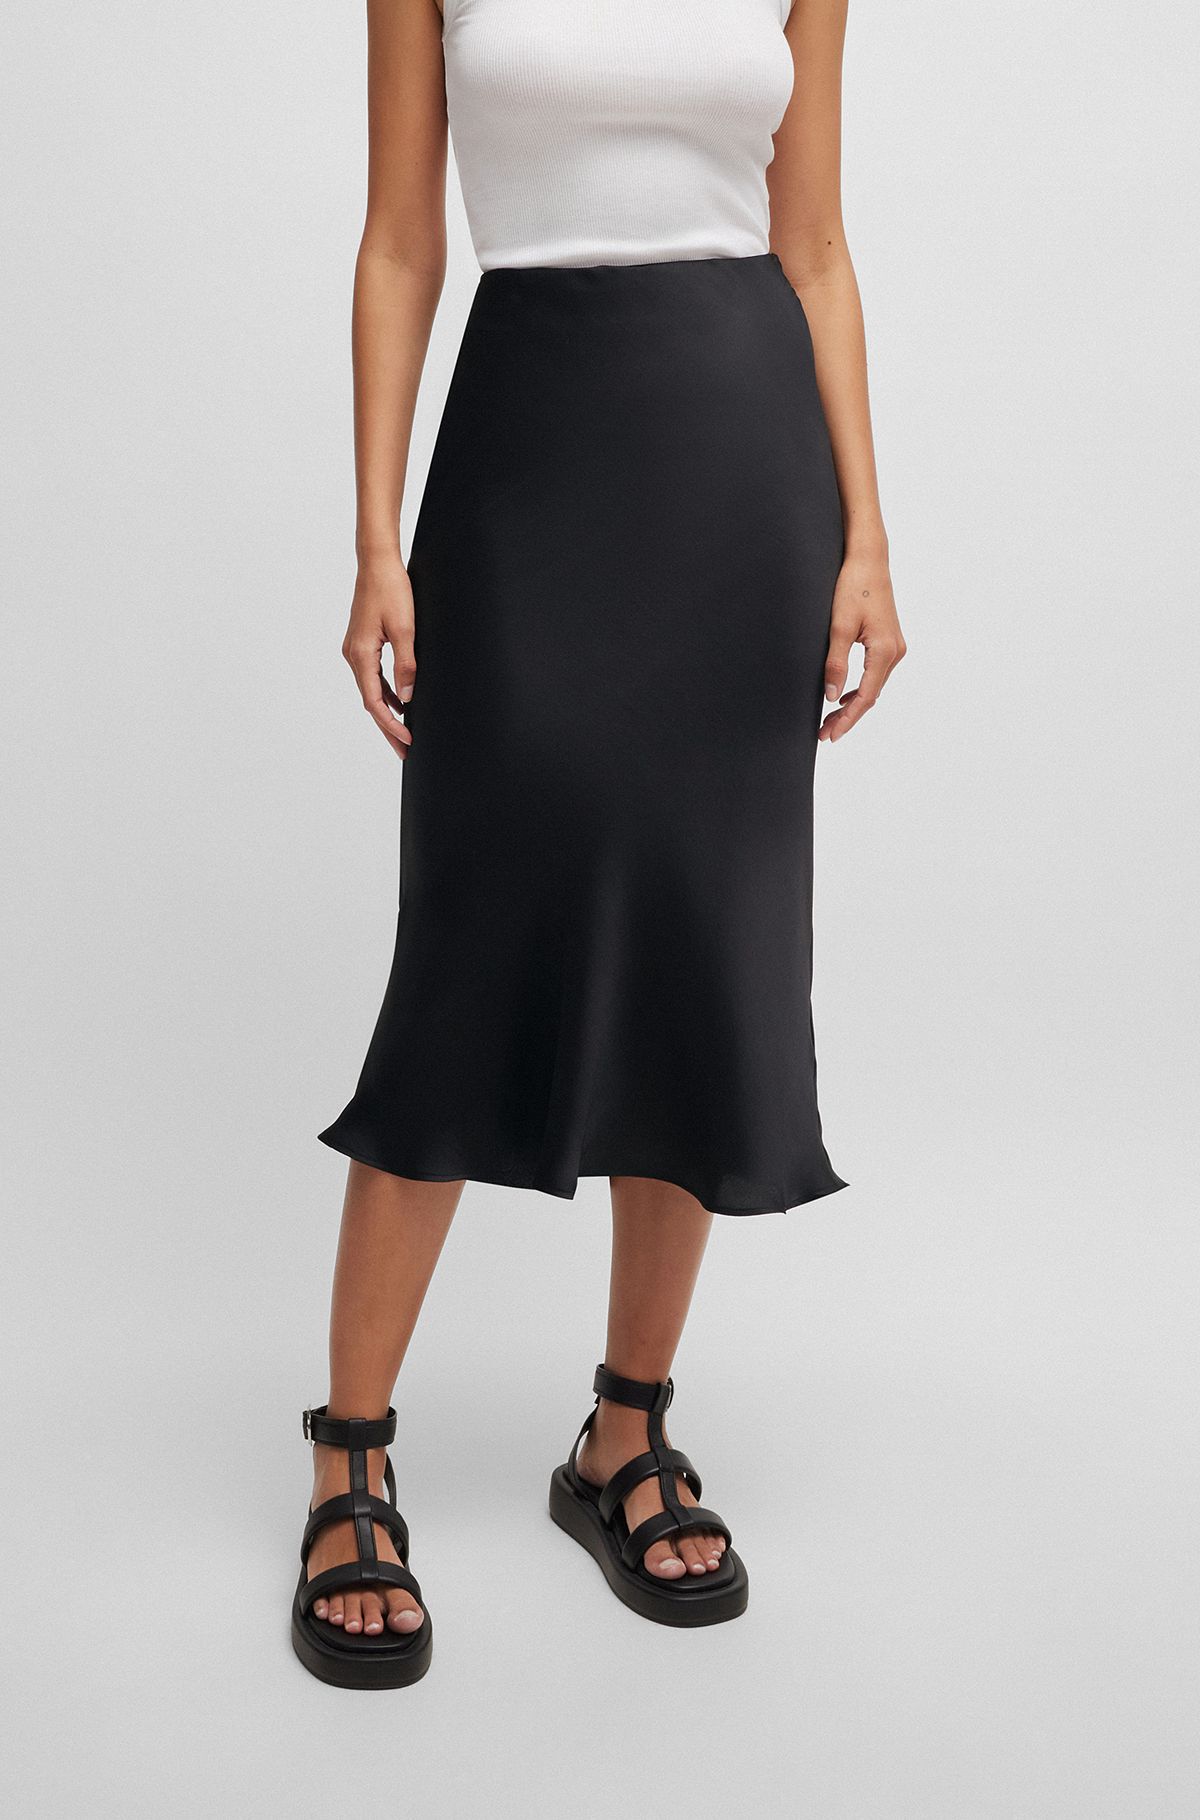 Satin midi skirt with logo detail, Black